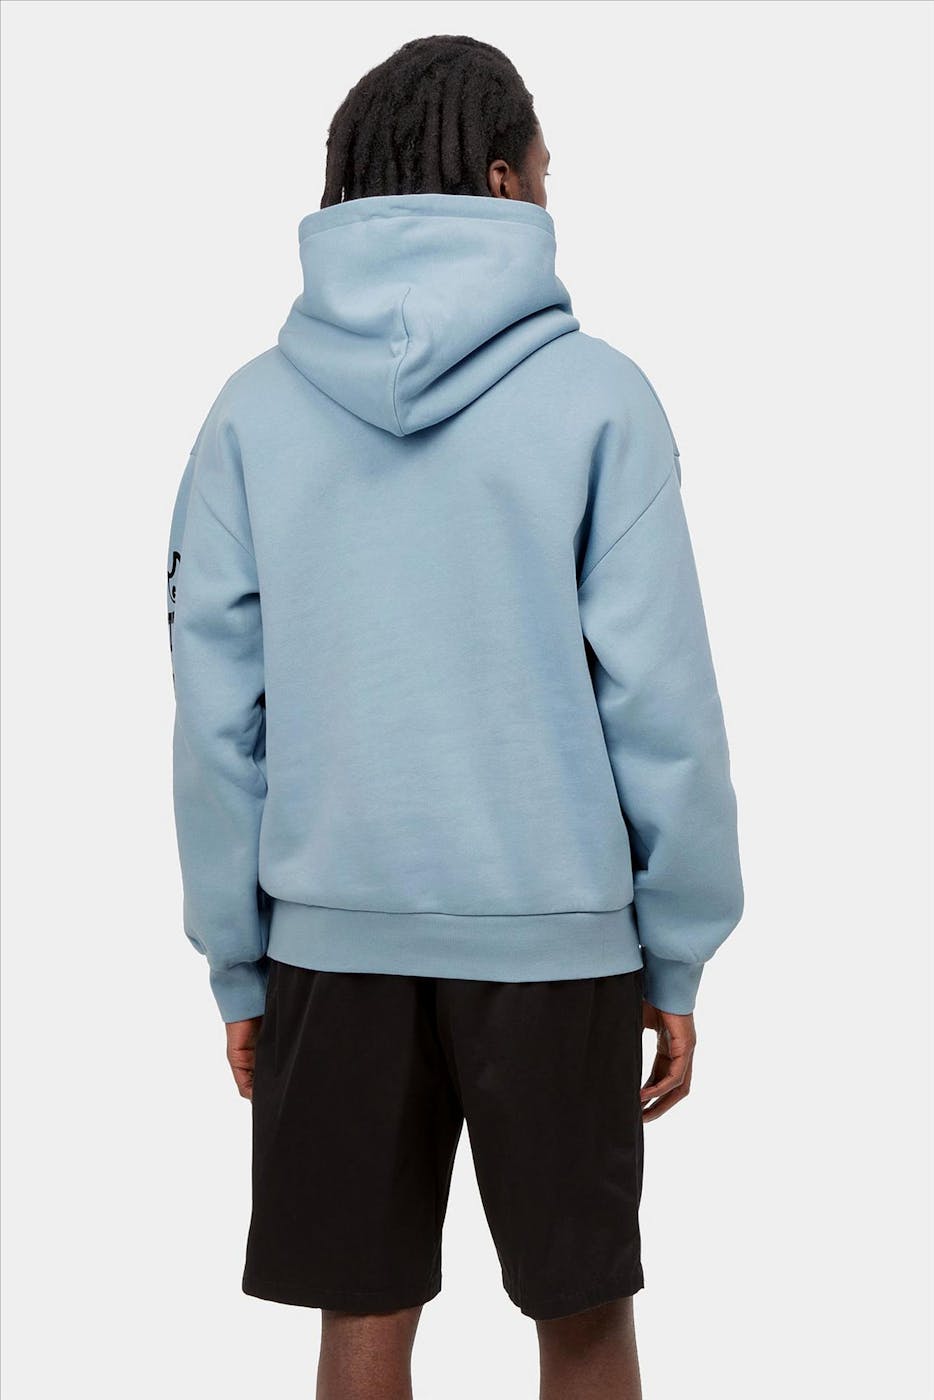 Carhartt WIP - Lichtblauwe Hooded Grin sweater